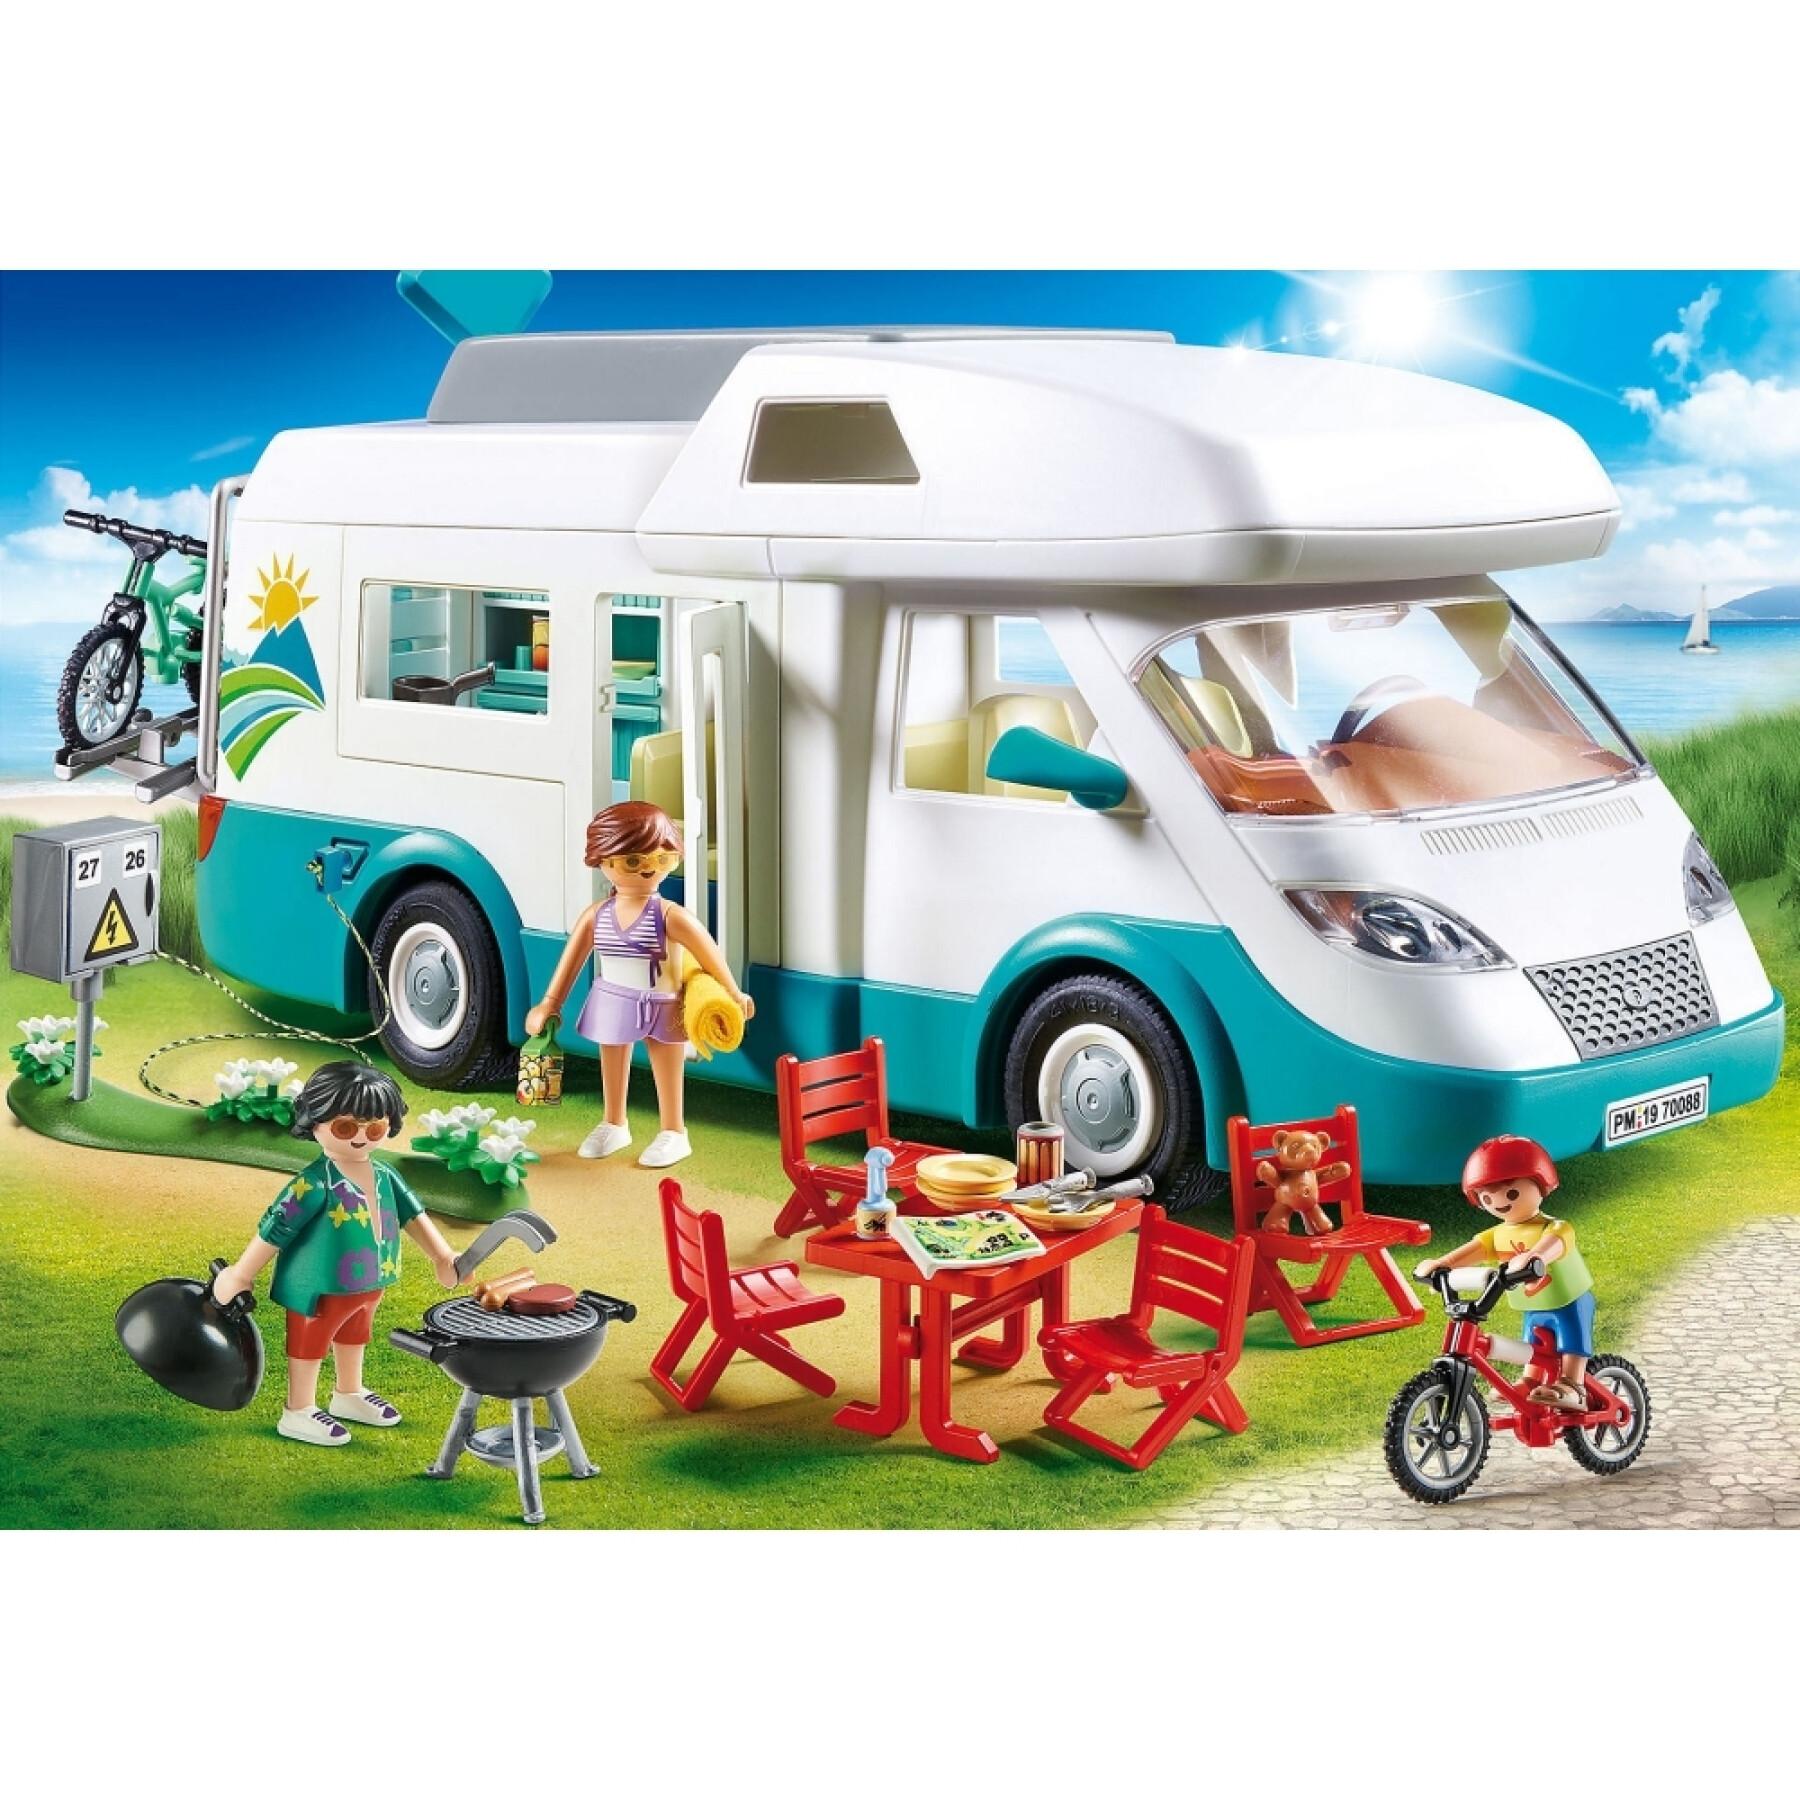 Familie Sommerwohnwagen Playmobil